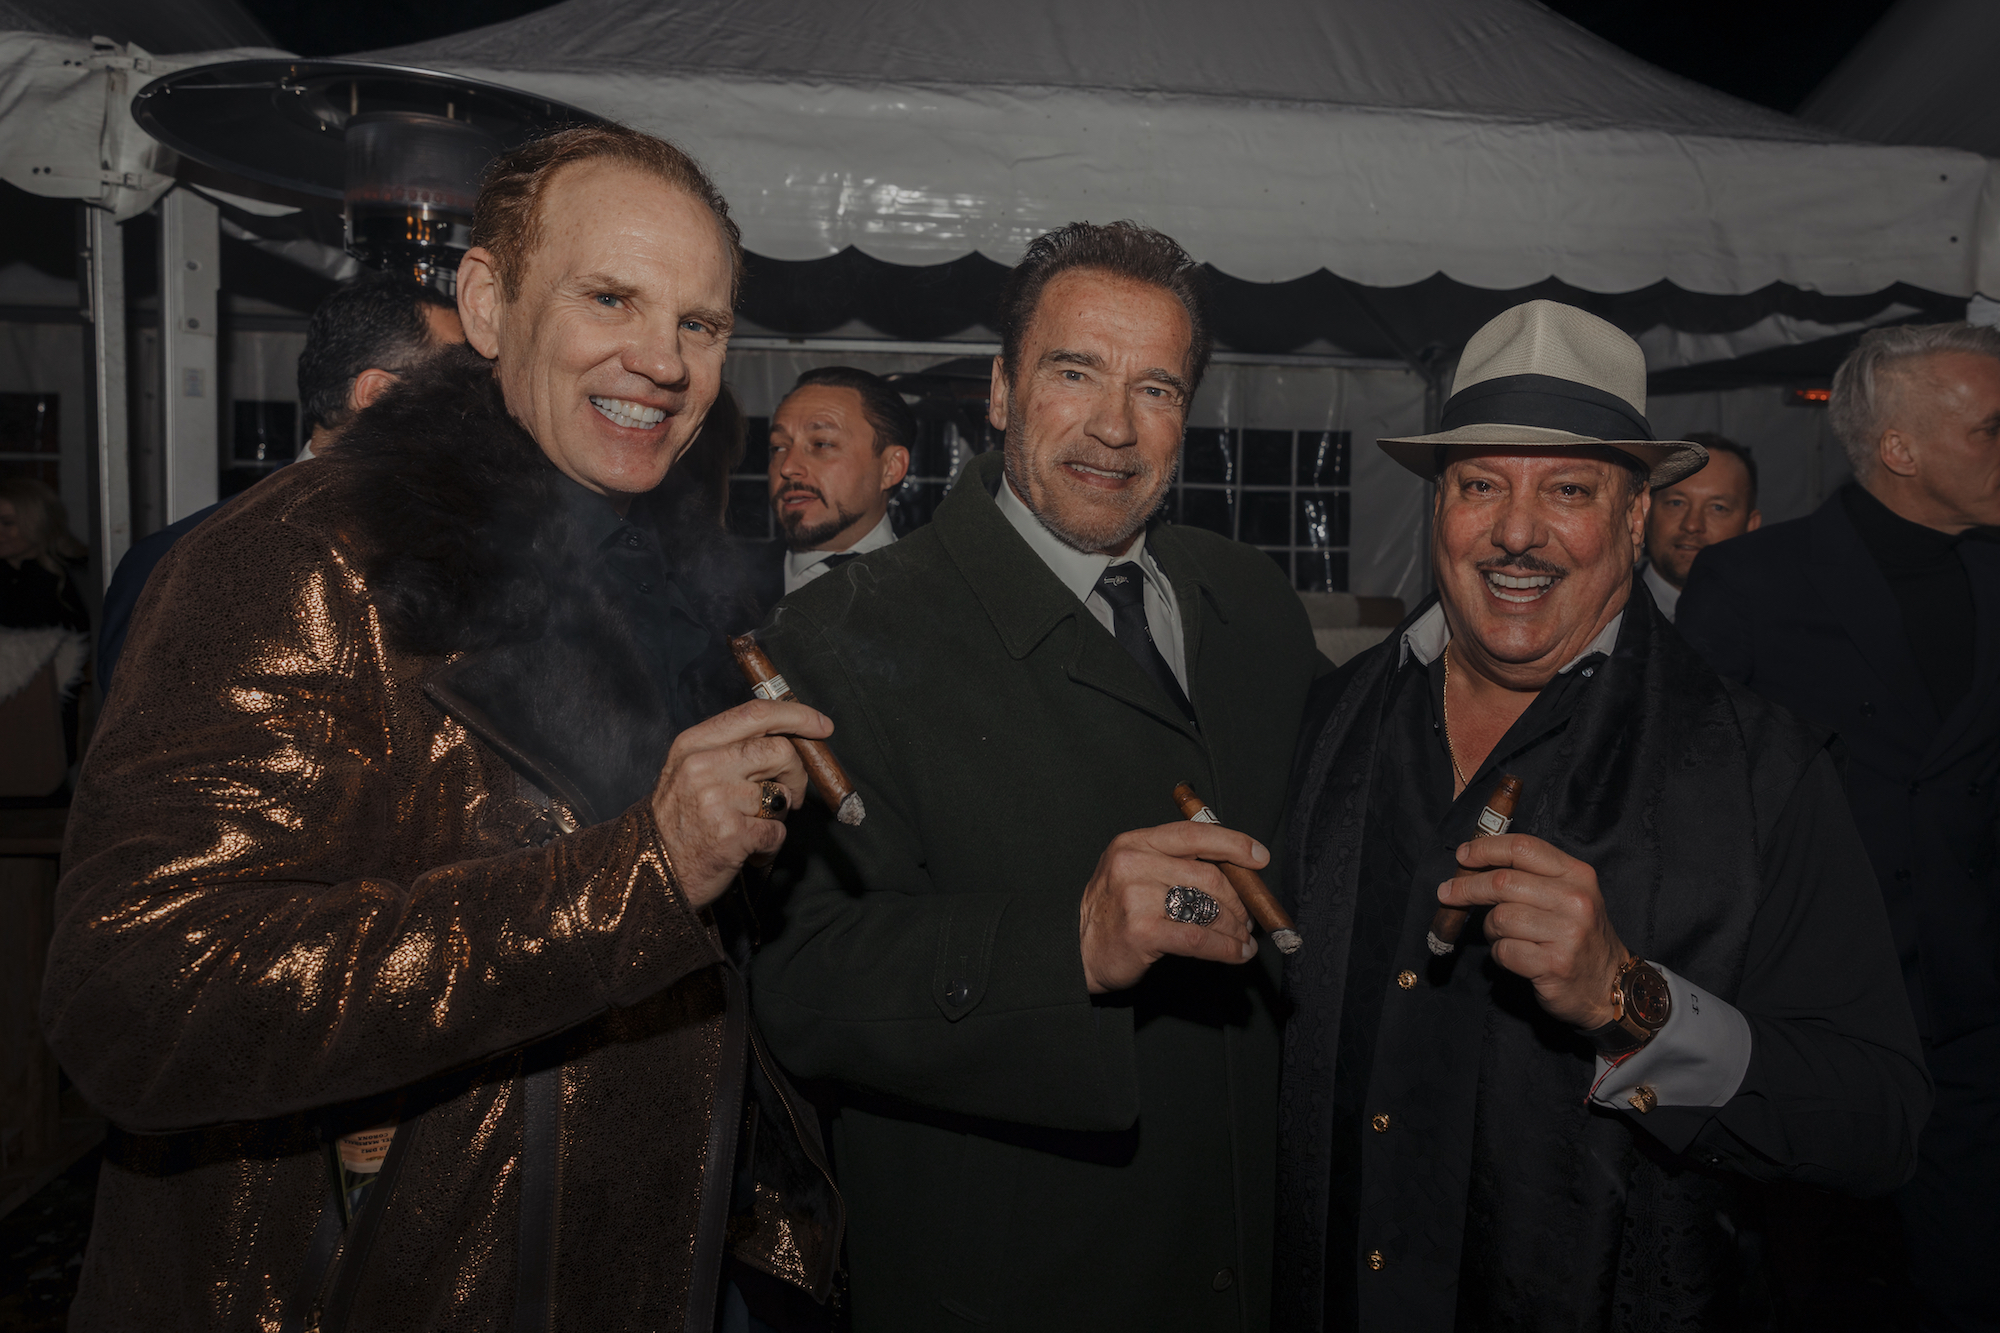 From left to right: Daniel Marshall, Governor Arnold Schwarzenegger, Carlos Fuente at the Daniel Marshall Cigar Lounge and Terrace - Kitzbuhel Country Club, Kitzbuhel, Austria